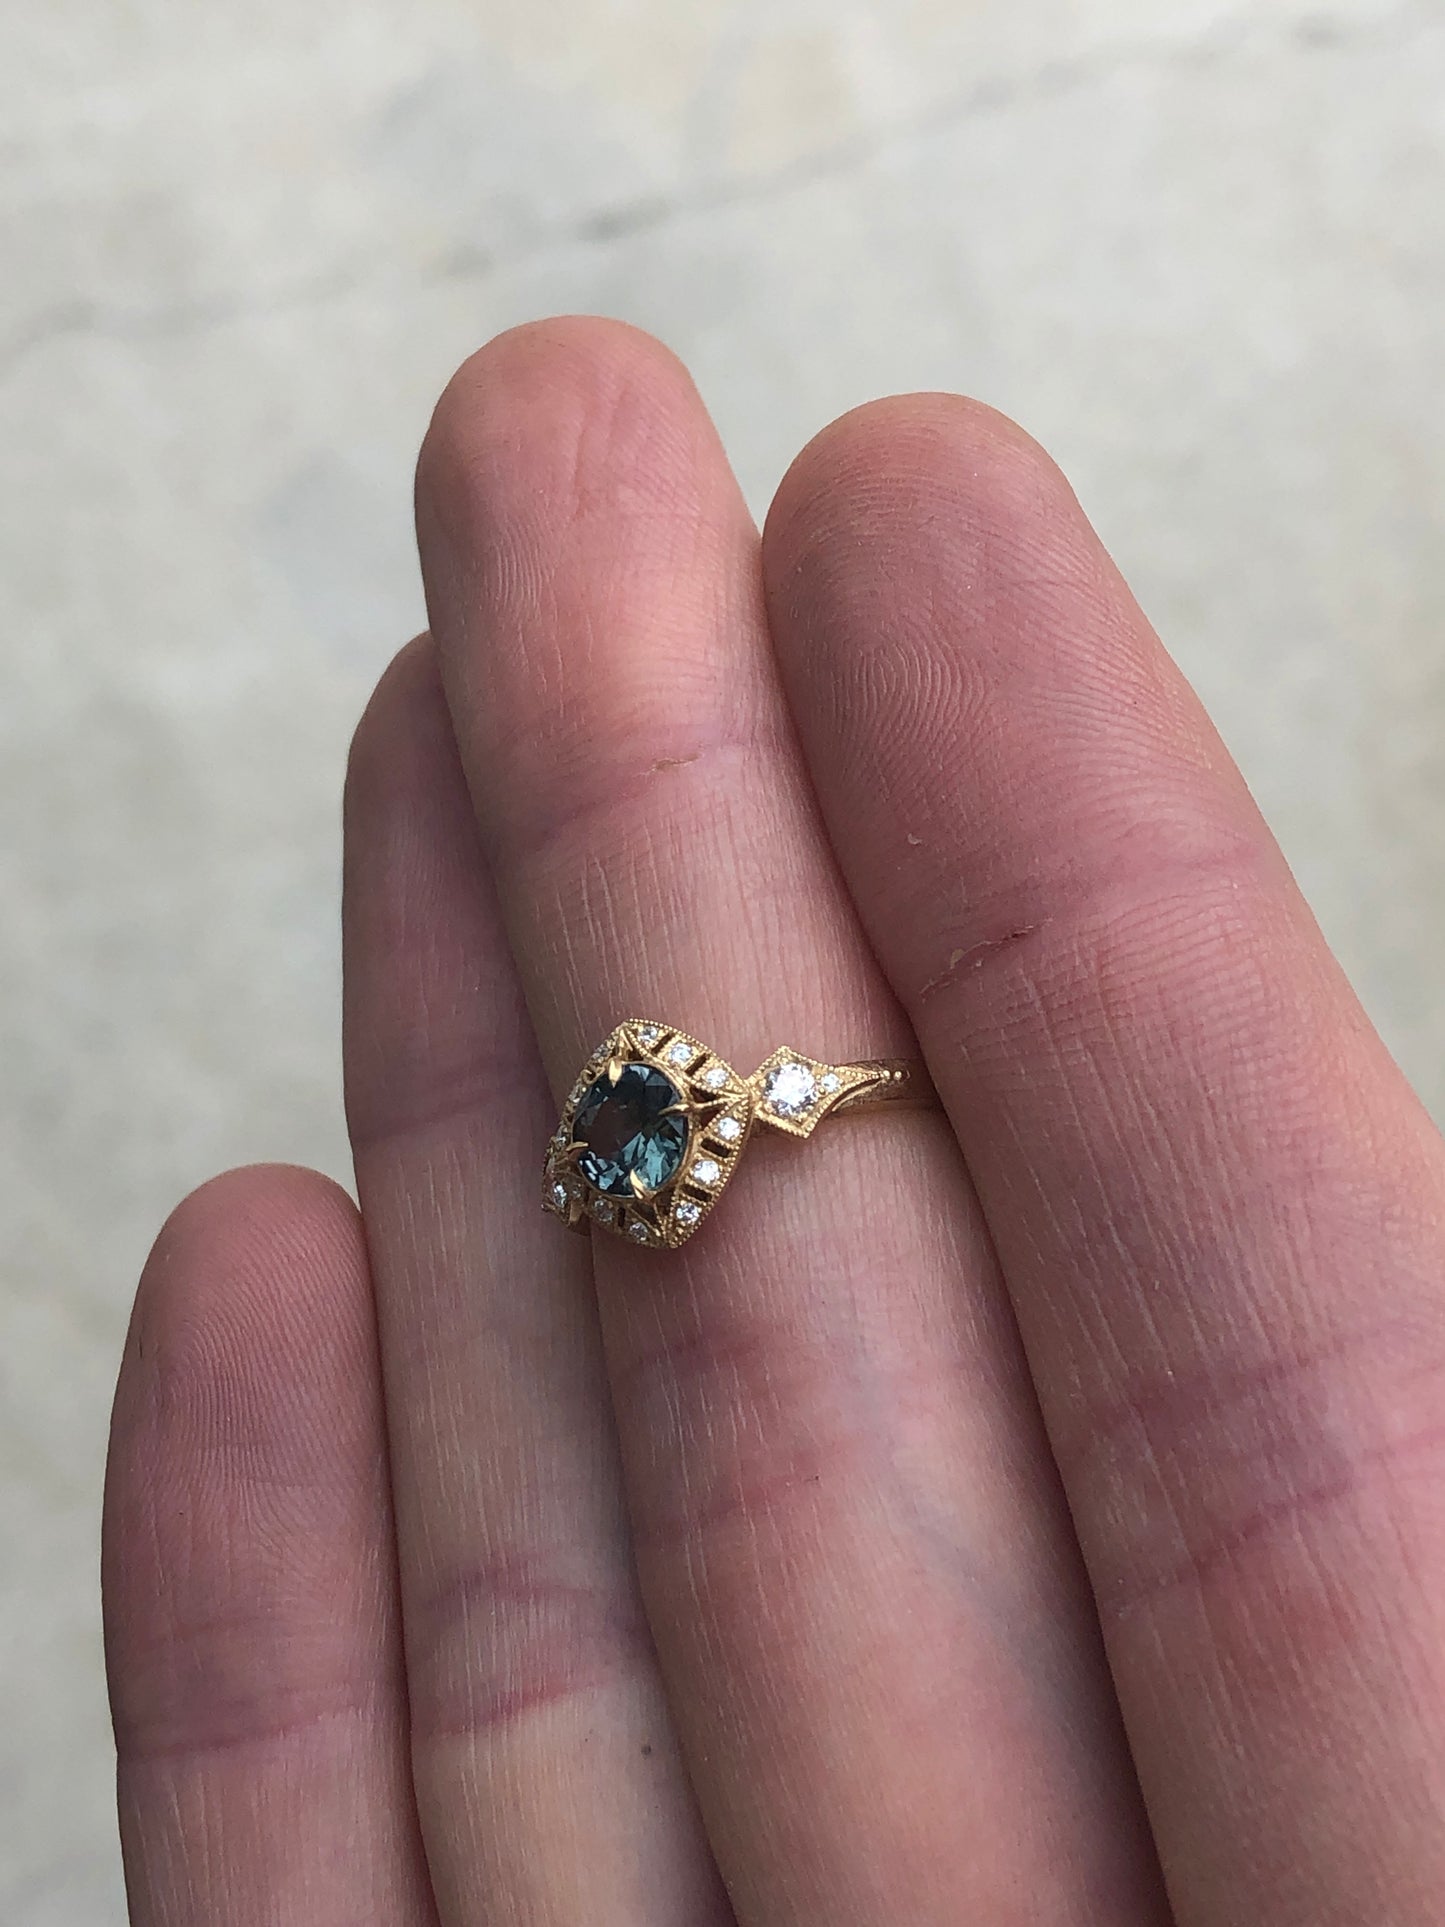 Basilea Ring with Teal Montana Sapphire